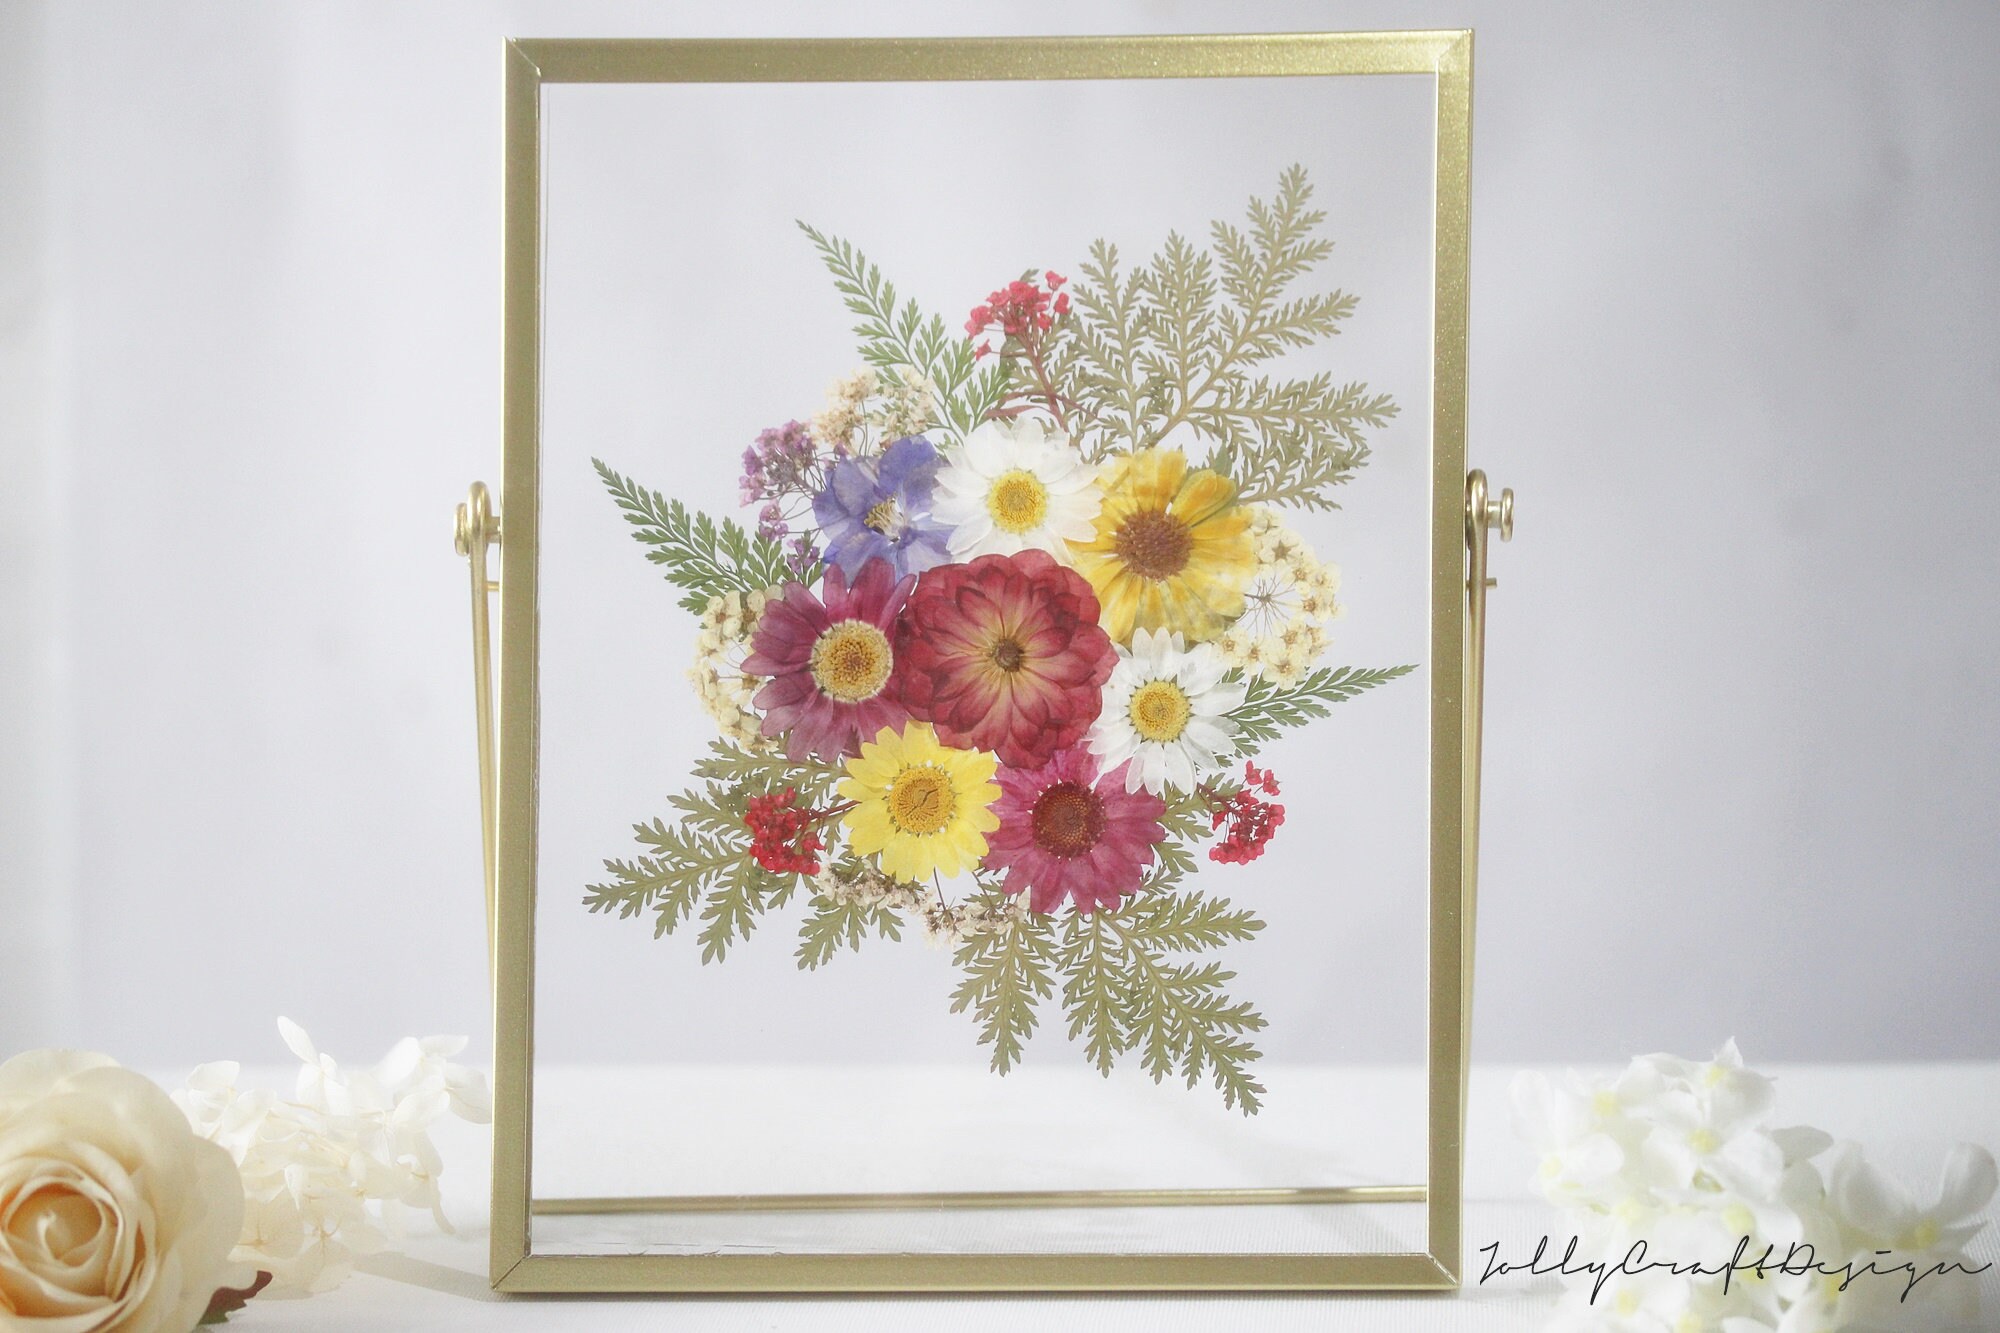 Pressed Flower Dried Flower Frame, Pressed Flower Frame, Pressed Dried  Flower Frame With Crystal Clear Acrylic Board 